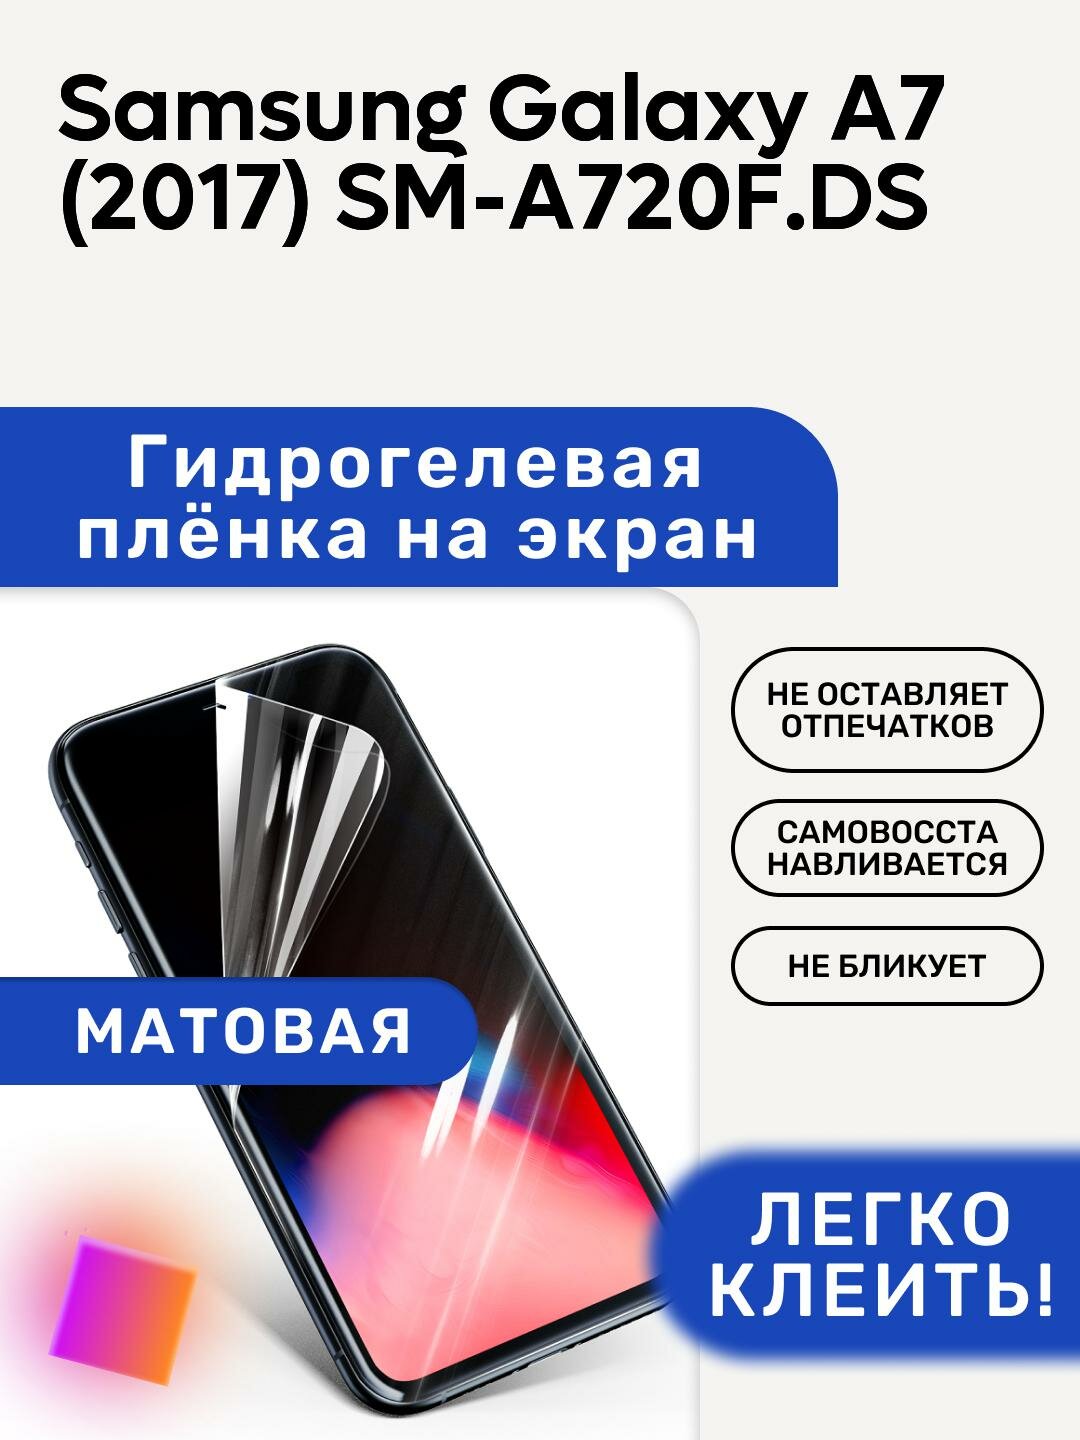 Матовая Гидрогелевая плёнка, полиуретановая, защита экрана Samsung Galaxy A7 (2017) SM-A720F/DS